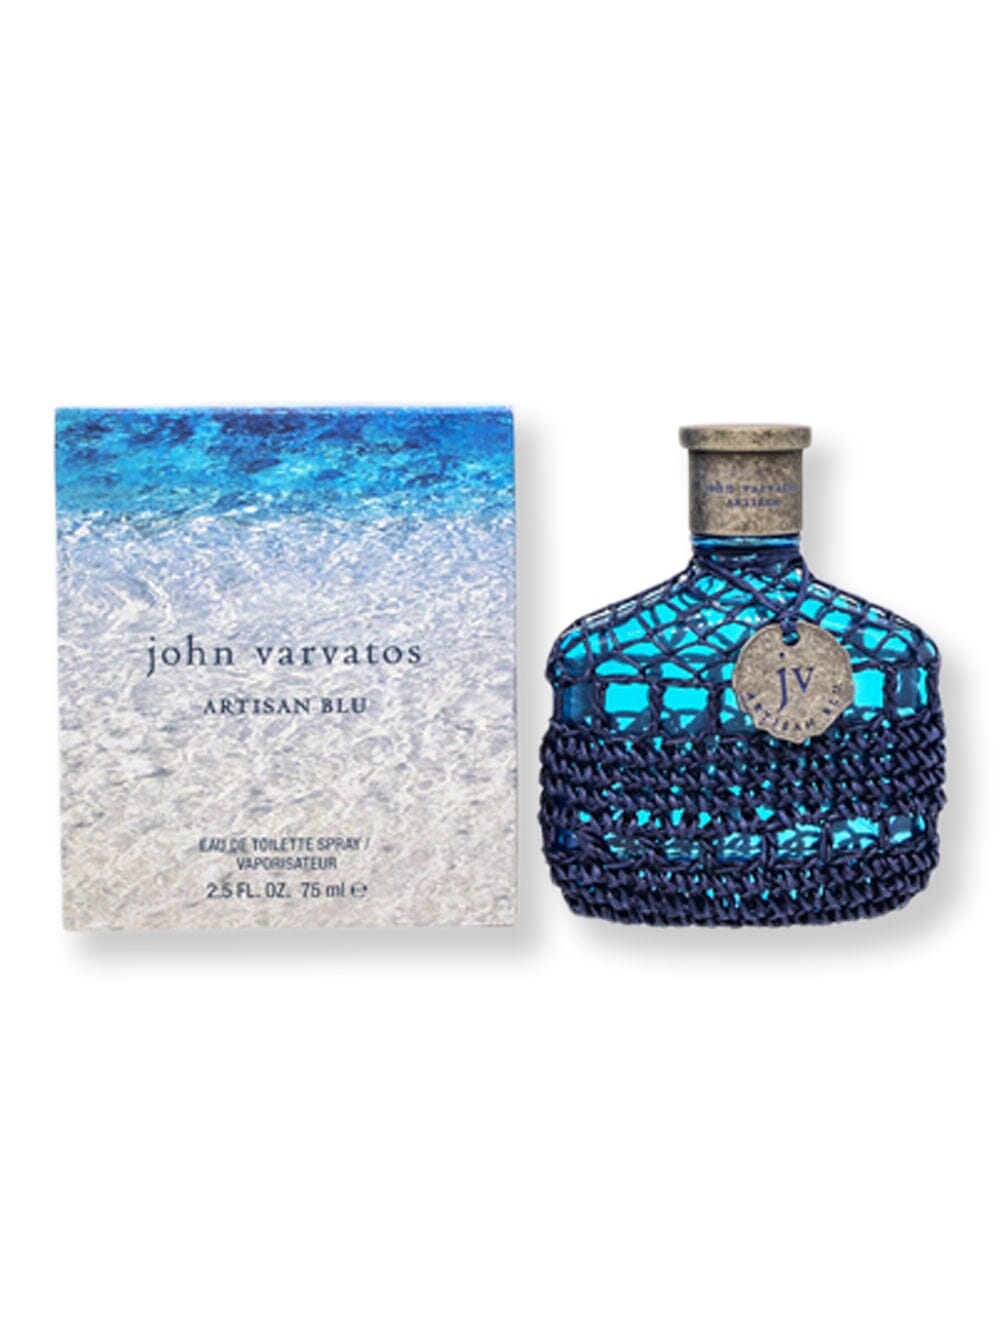 John Varvatos John Varvatos Artisan Blu EDT Spray 2.5 oz75 ml Perfume 